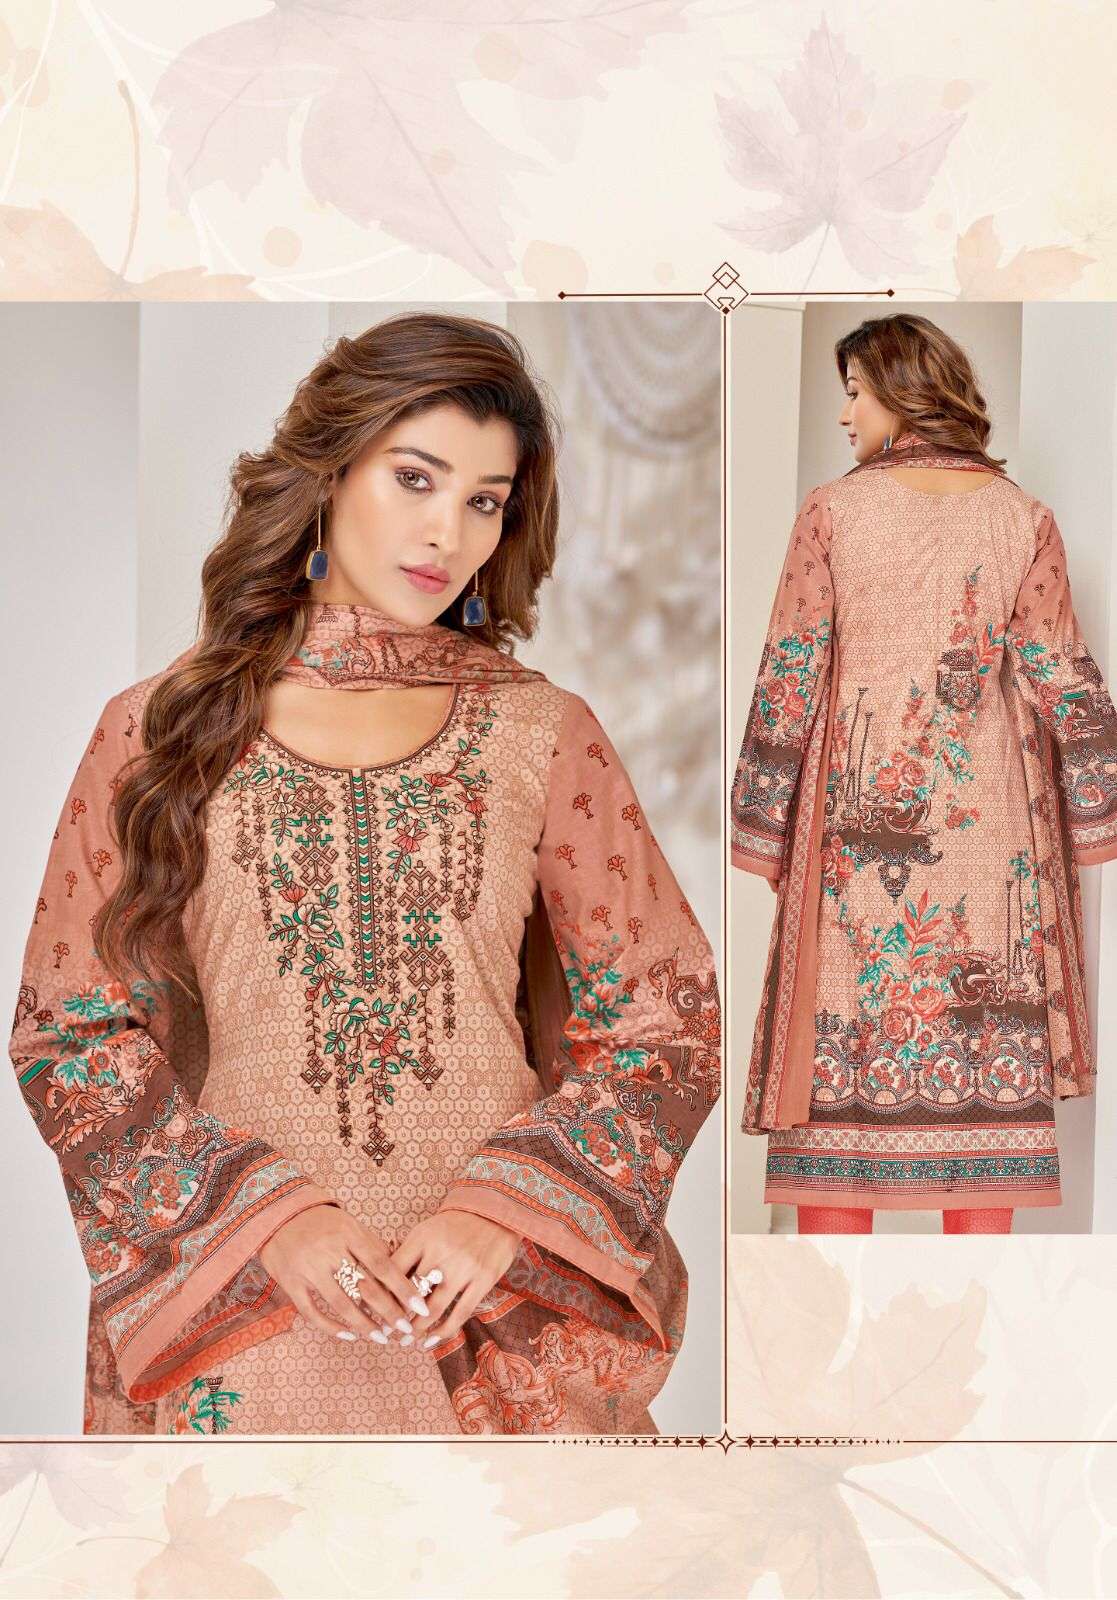 kala fashion meher vol-9 4801-4812 series pure cotton designer salwar suits wholesale price surat